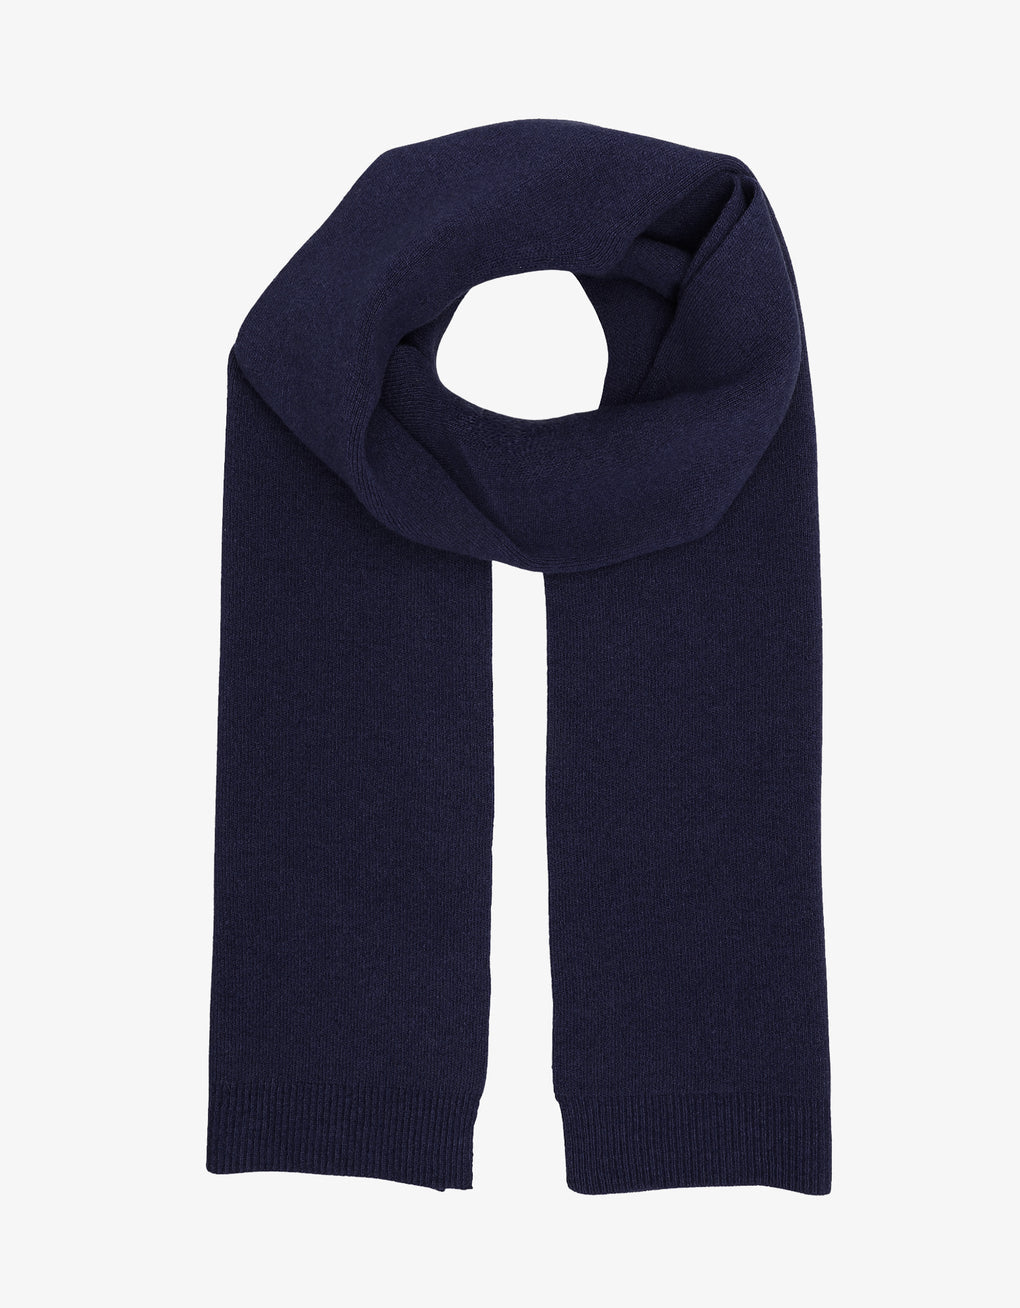 Merino wool scarf - navy blue